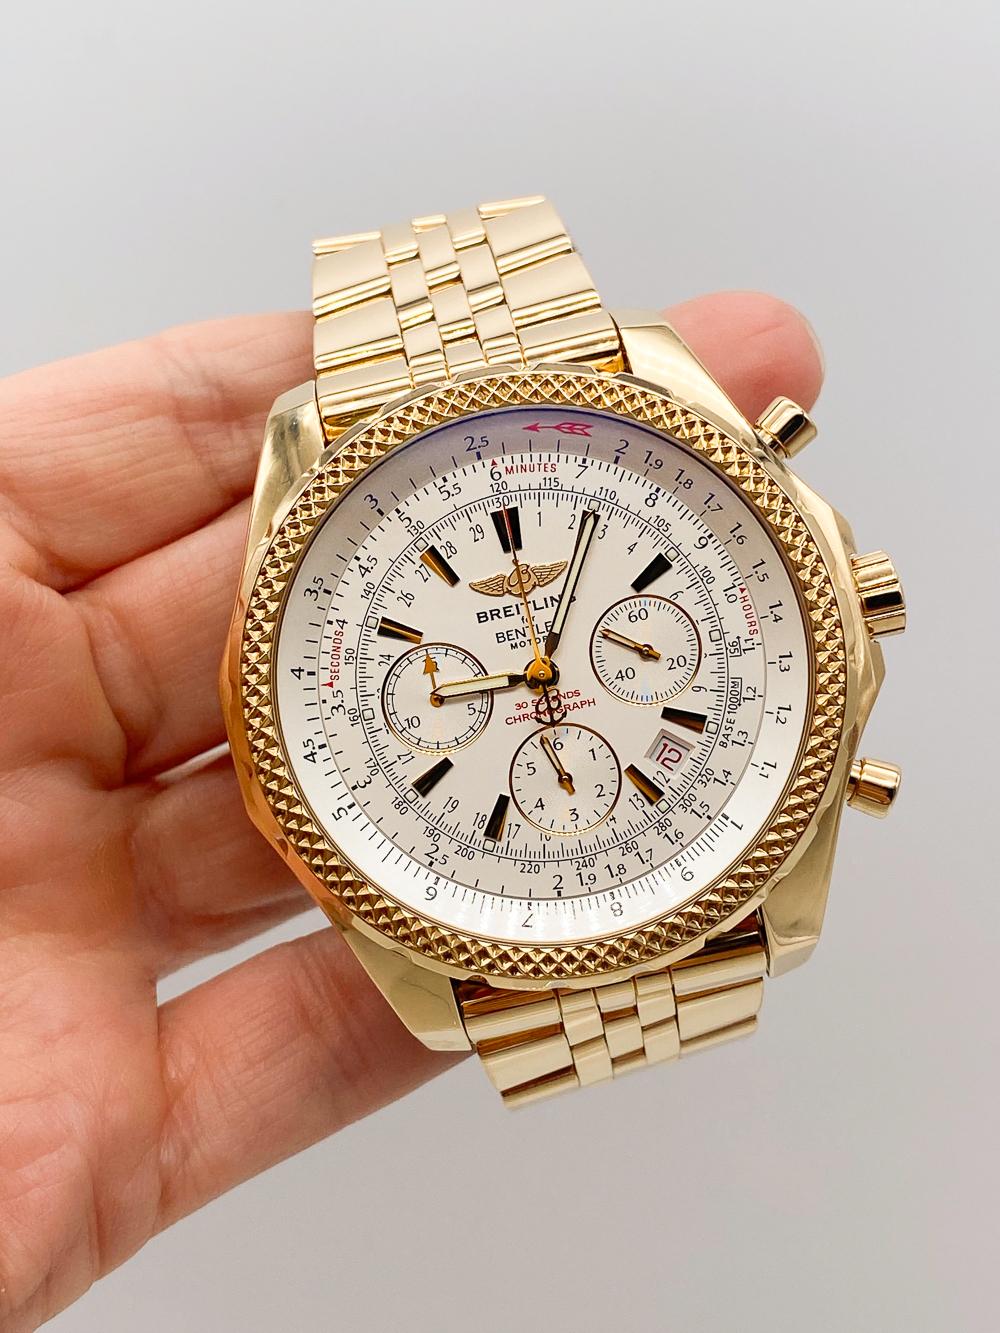 18K gold Breitling Bentley chronograph watch, est. $30,000-$35,000